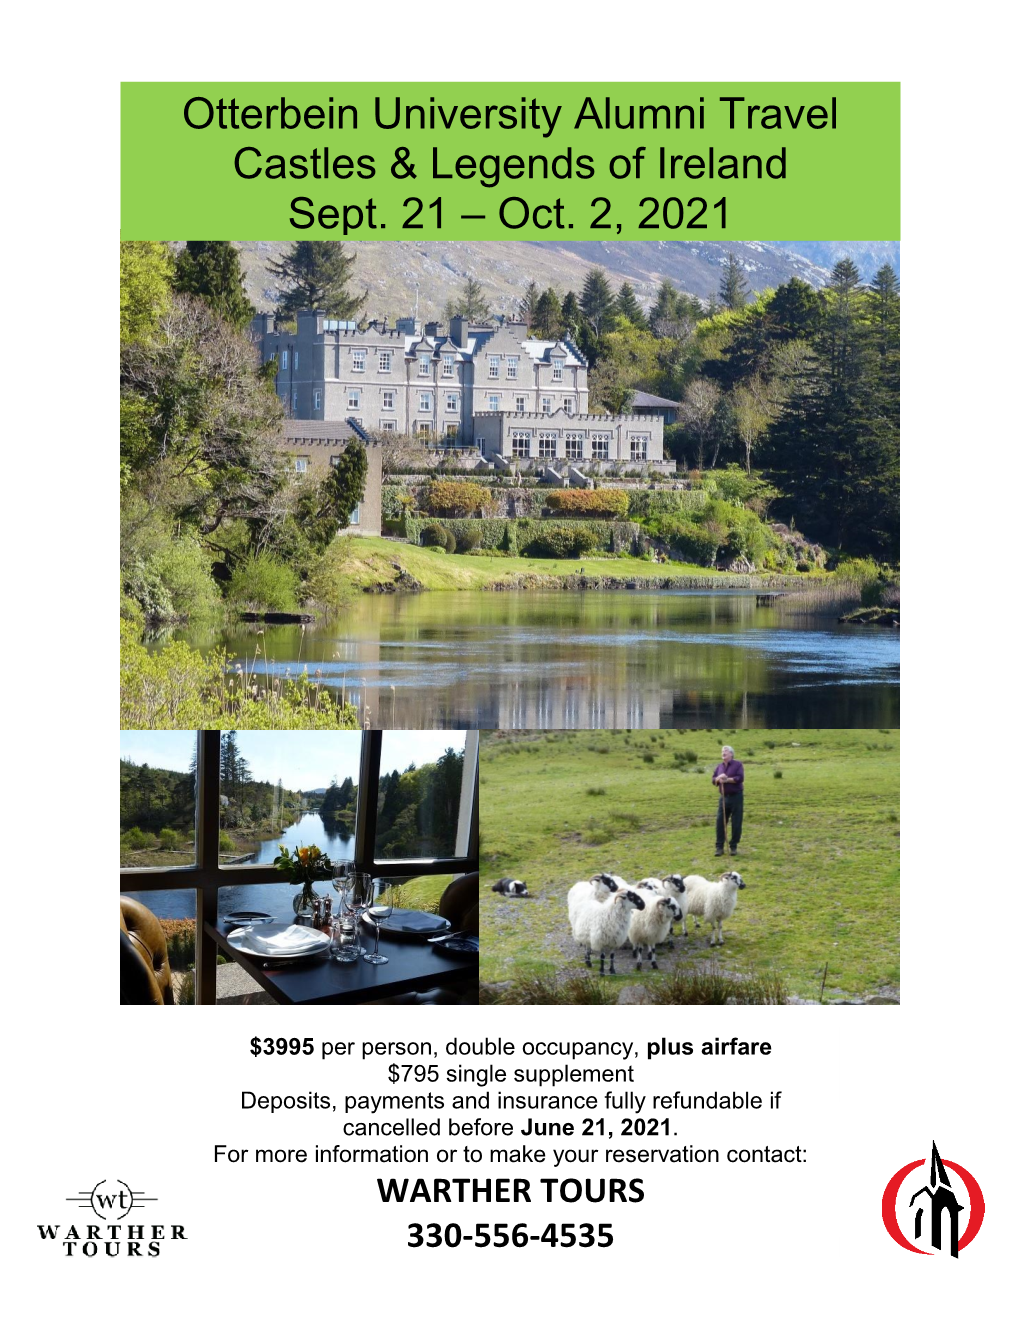 Otterbein University Alumni Travel Castles & Legends of Ireland Sept